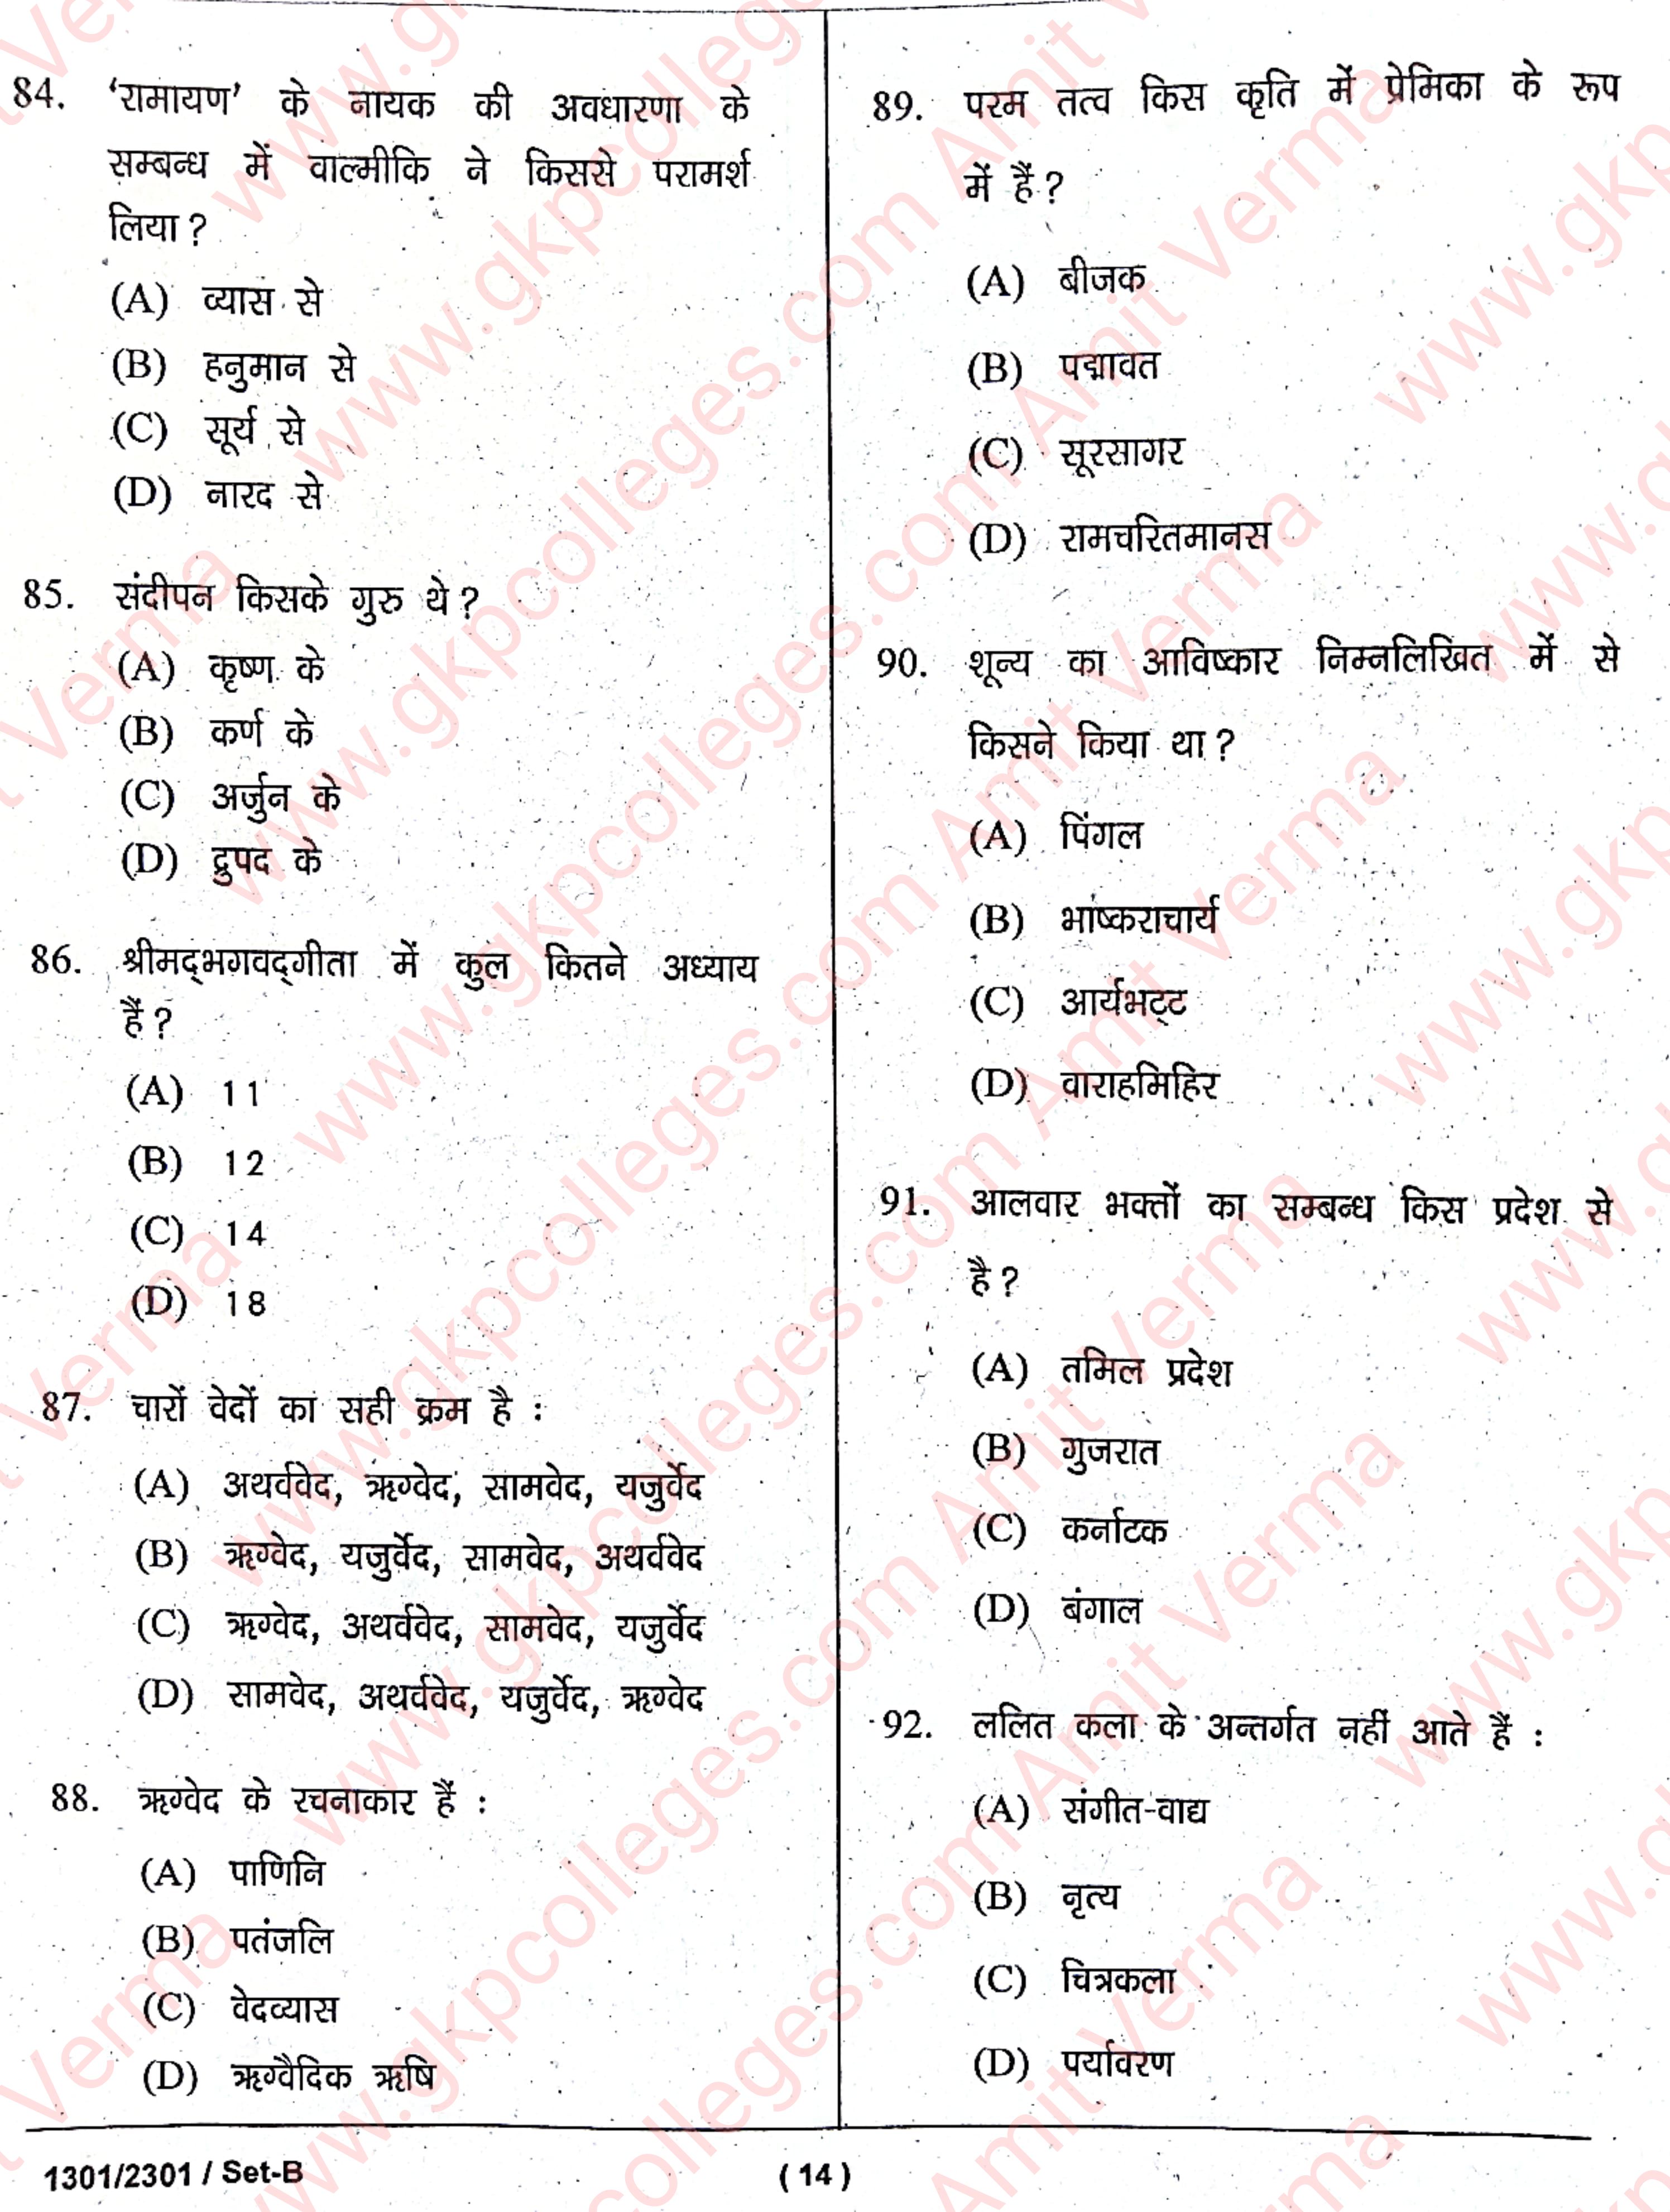 Rastra Gaurav Question Paper 2022 with Answer Key Siddharth University, Kapilvastu